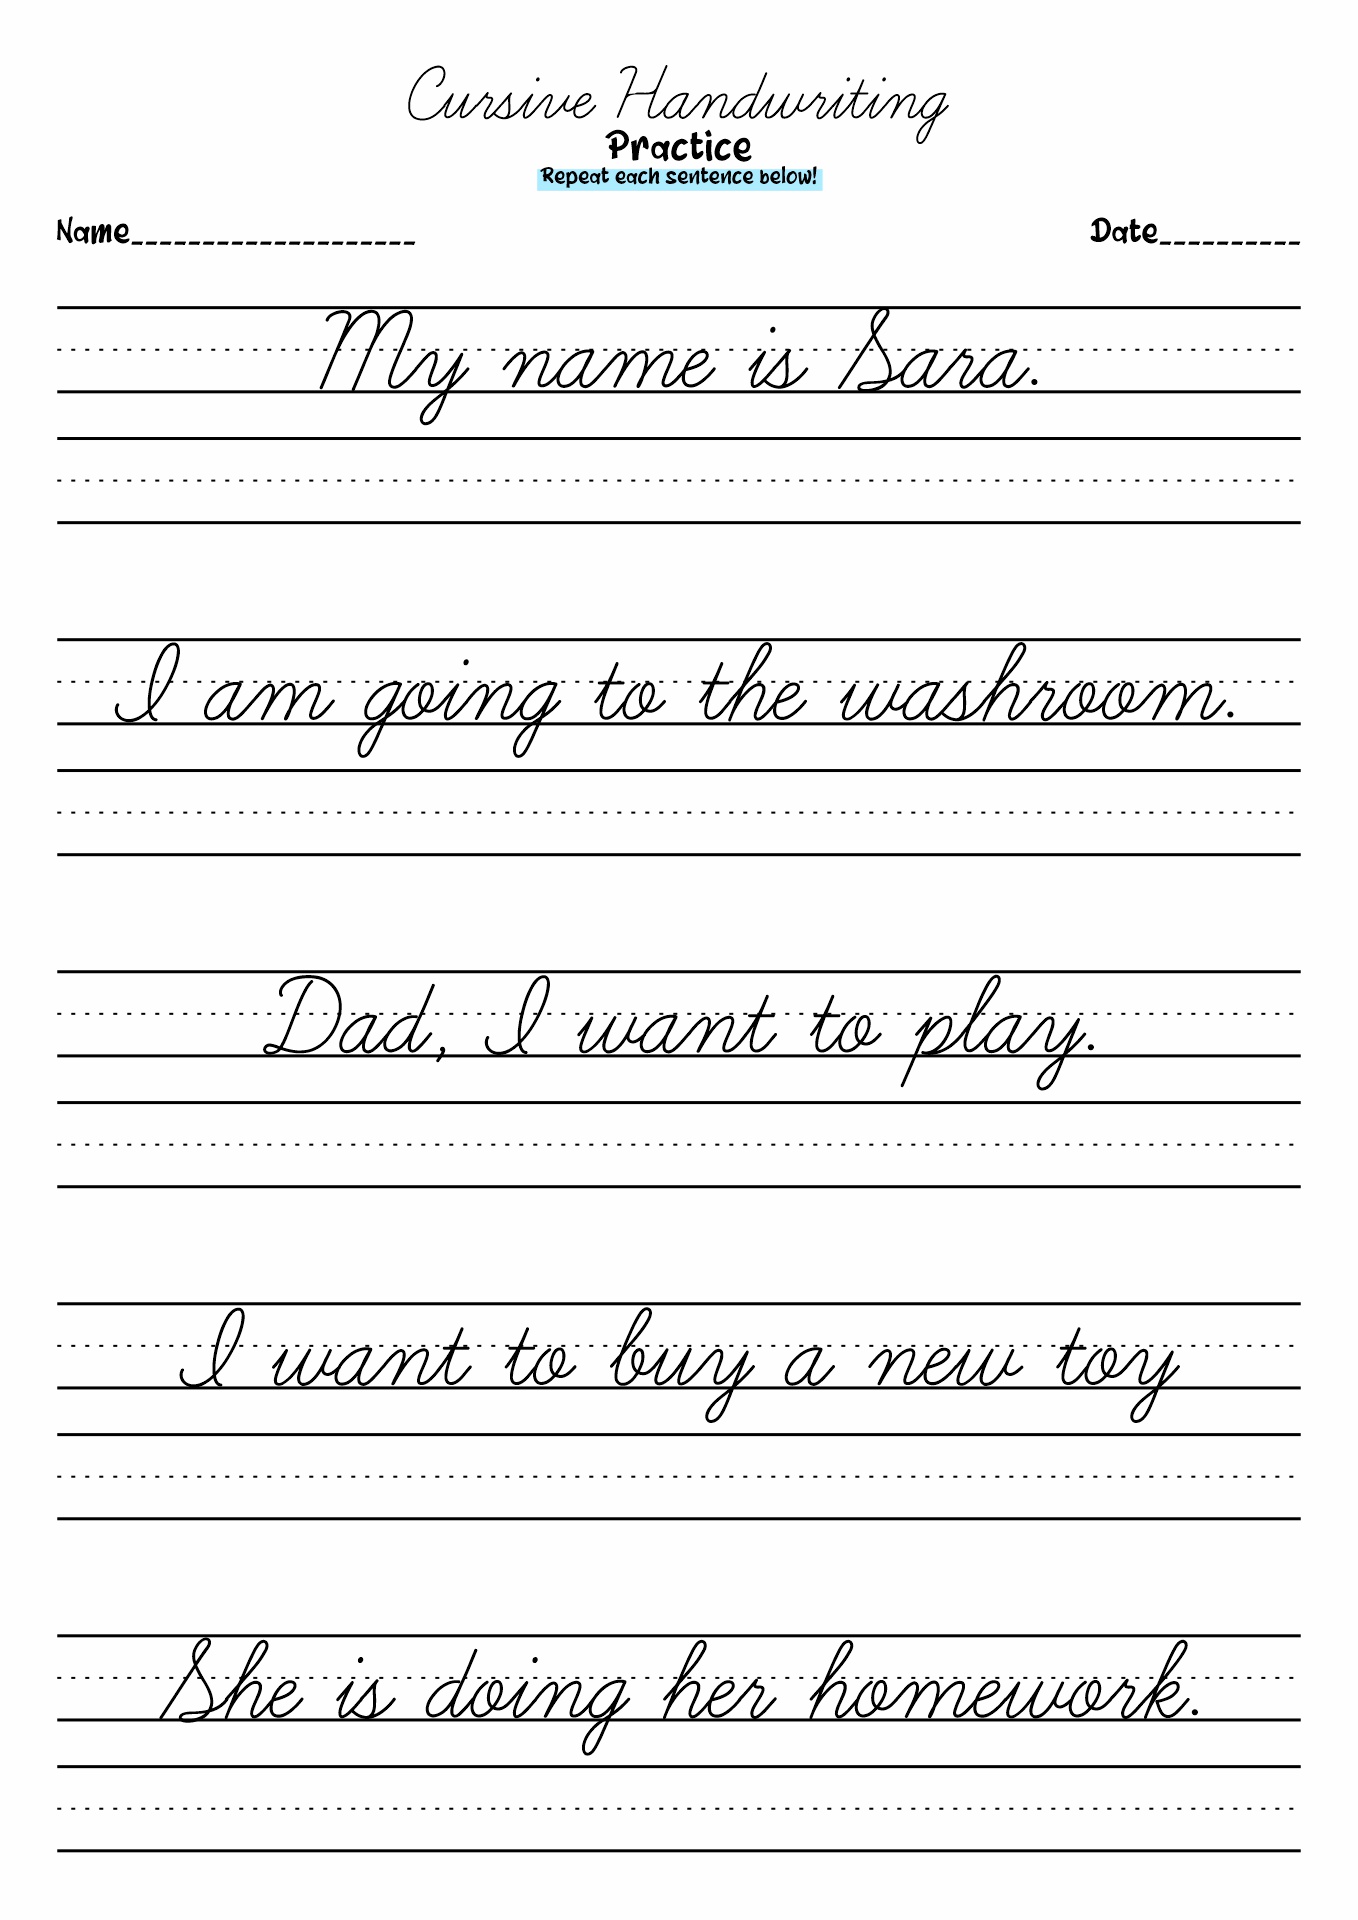 Printable Cursive Handwriting Practice Worksheets Image